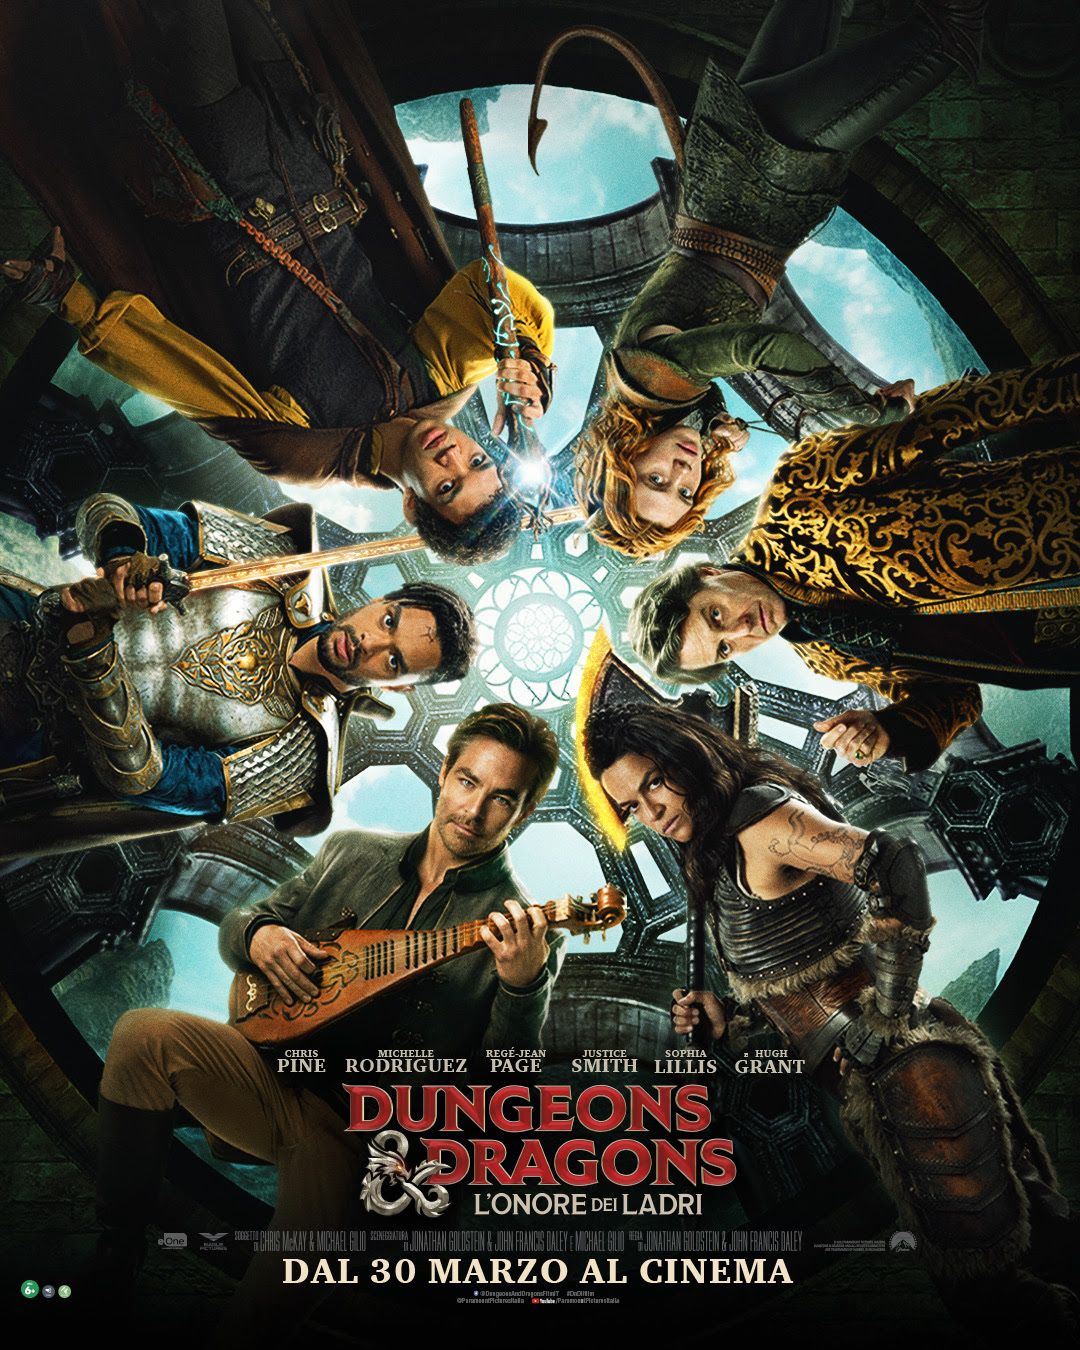 https://movieplayer.it/film/dungeons-dragons-lonore-dei-ladri_36694/